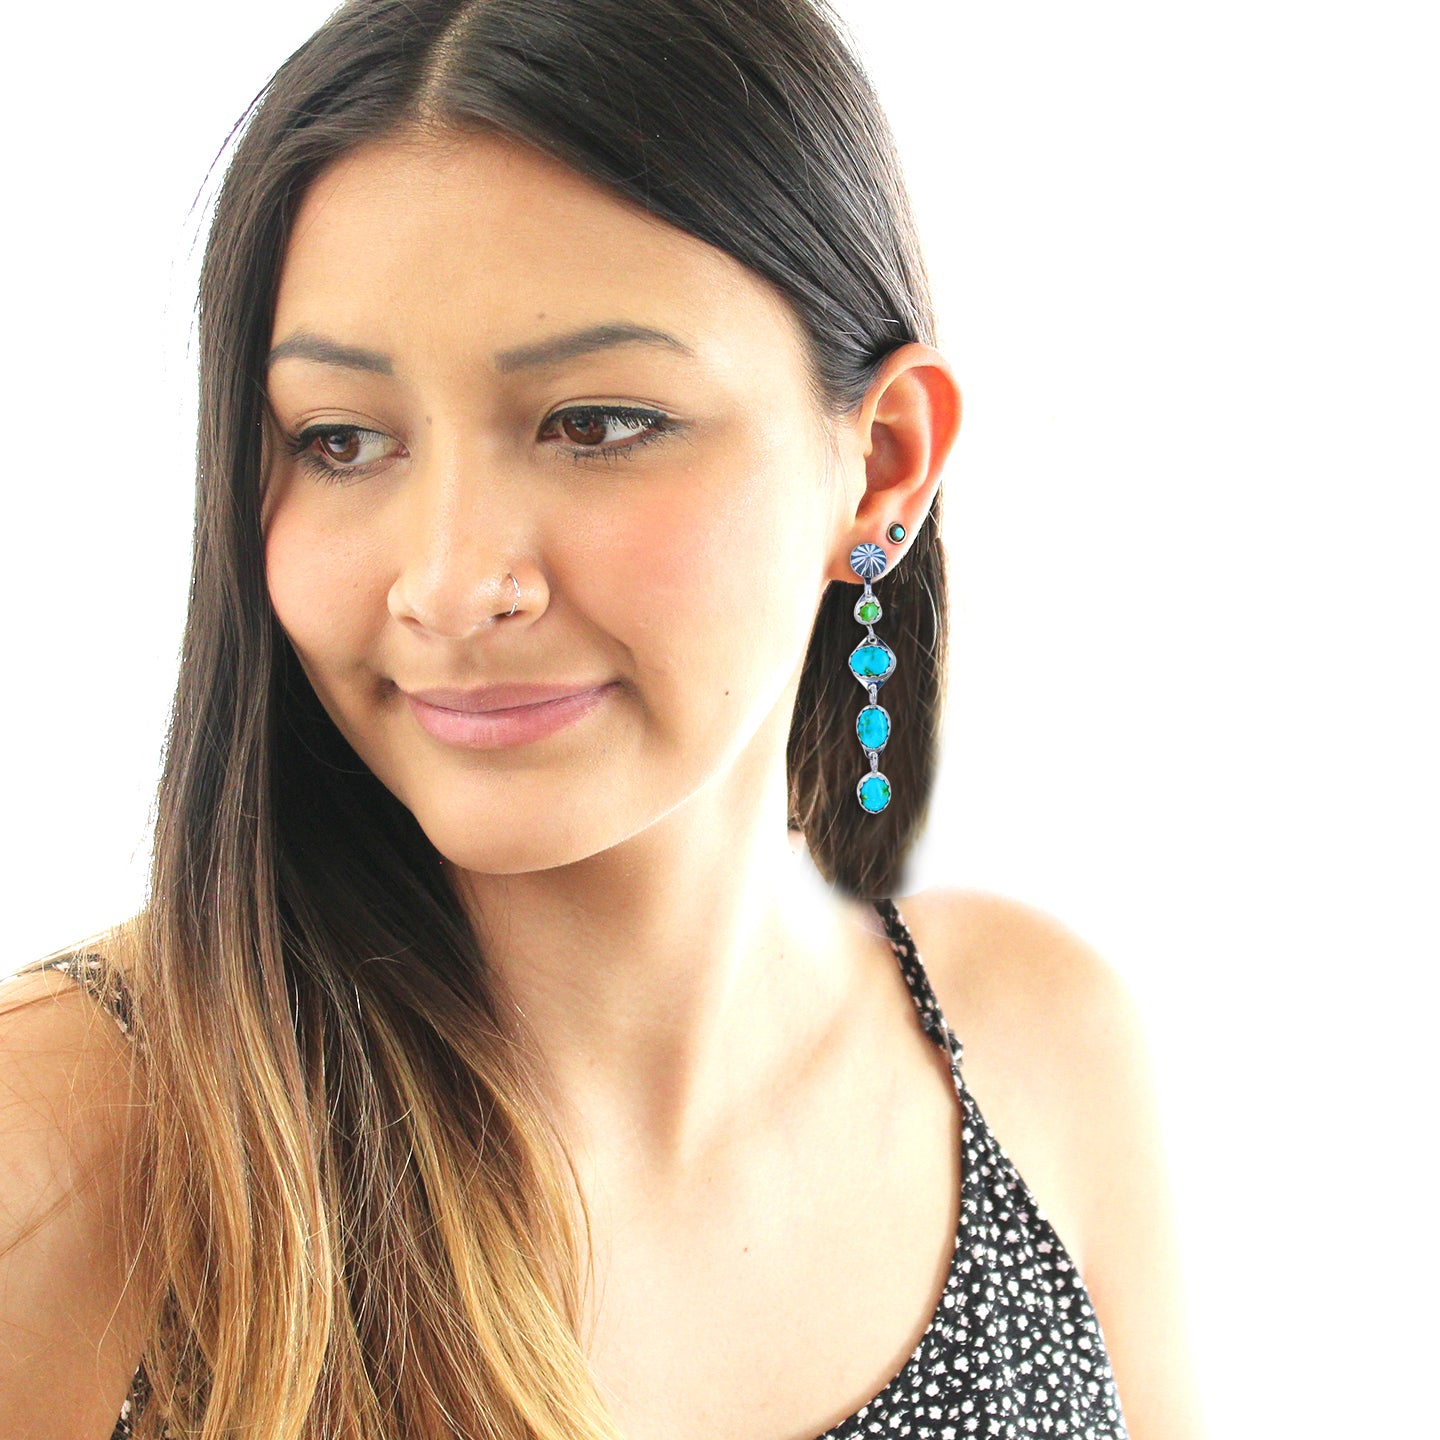 Sonoran Mountain Turquoise Earrings 4 Stone Dangles Sunburst Post -NewWorldGems